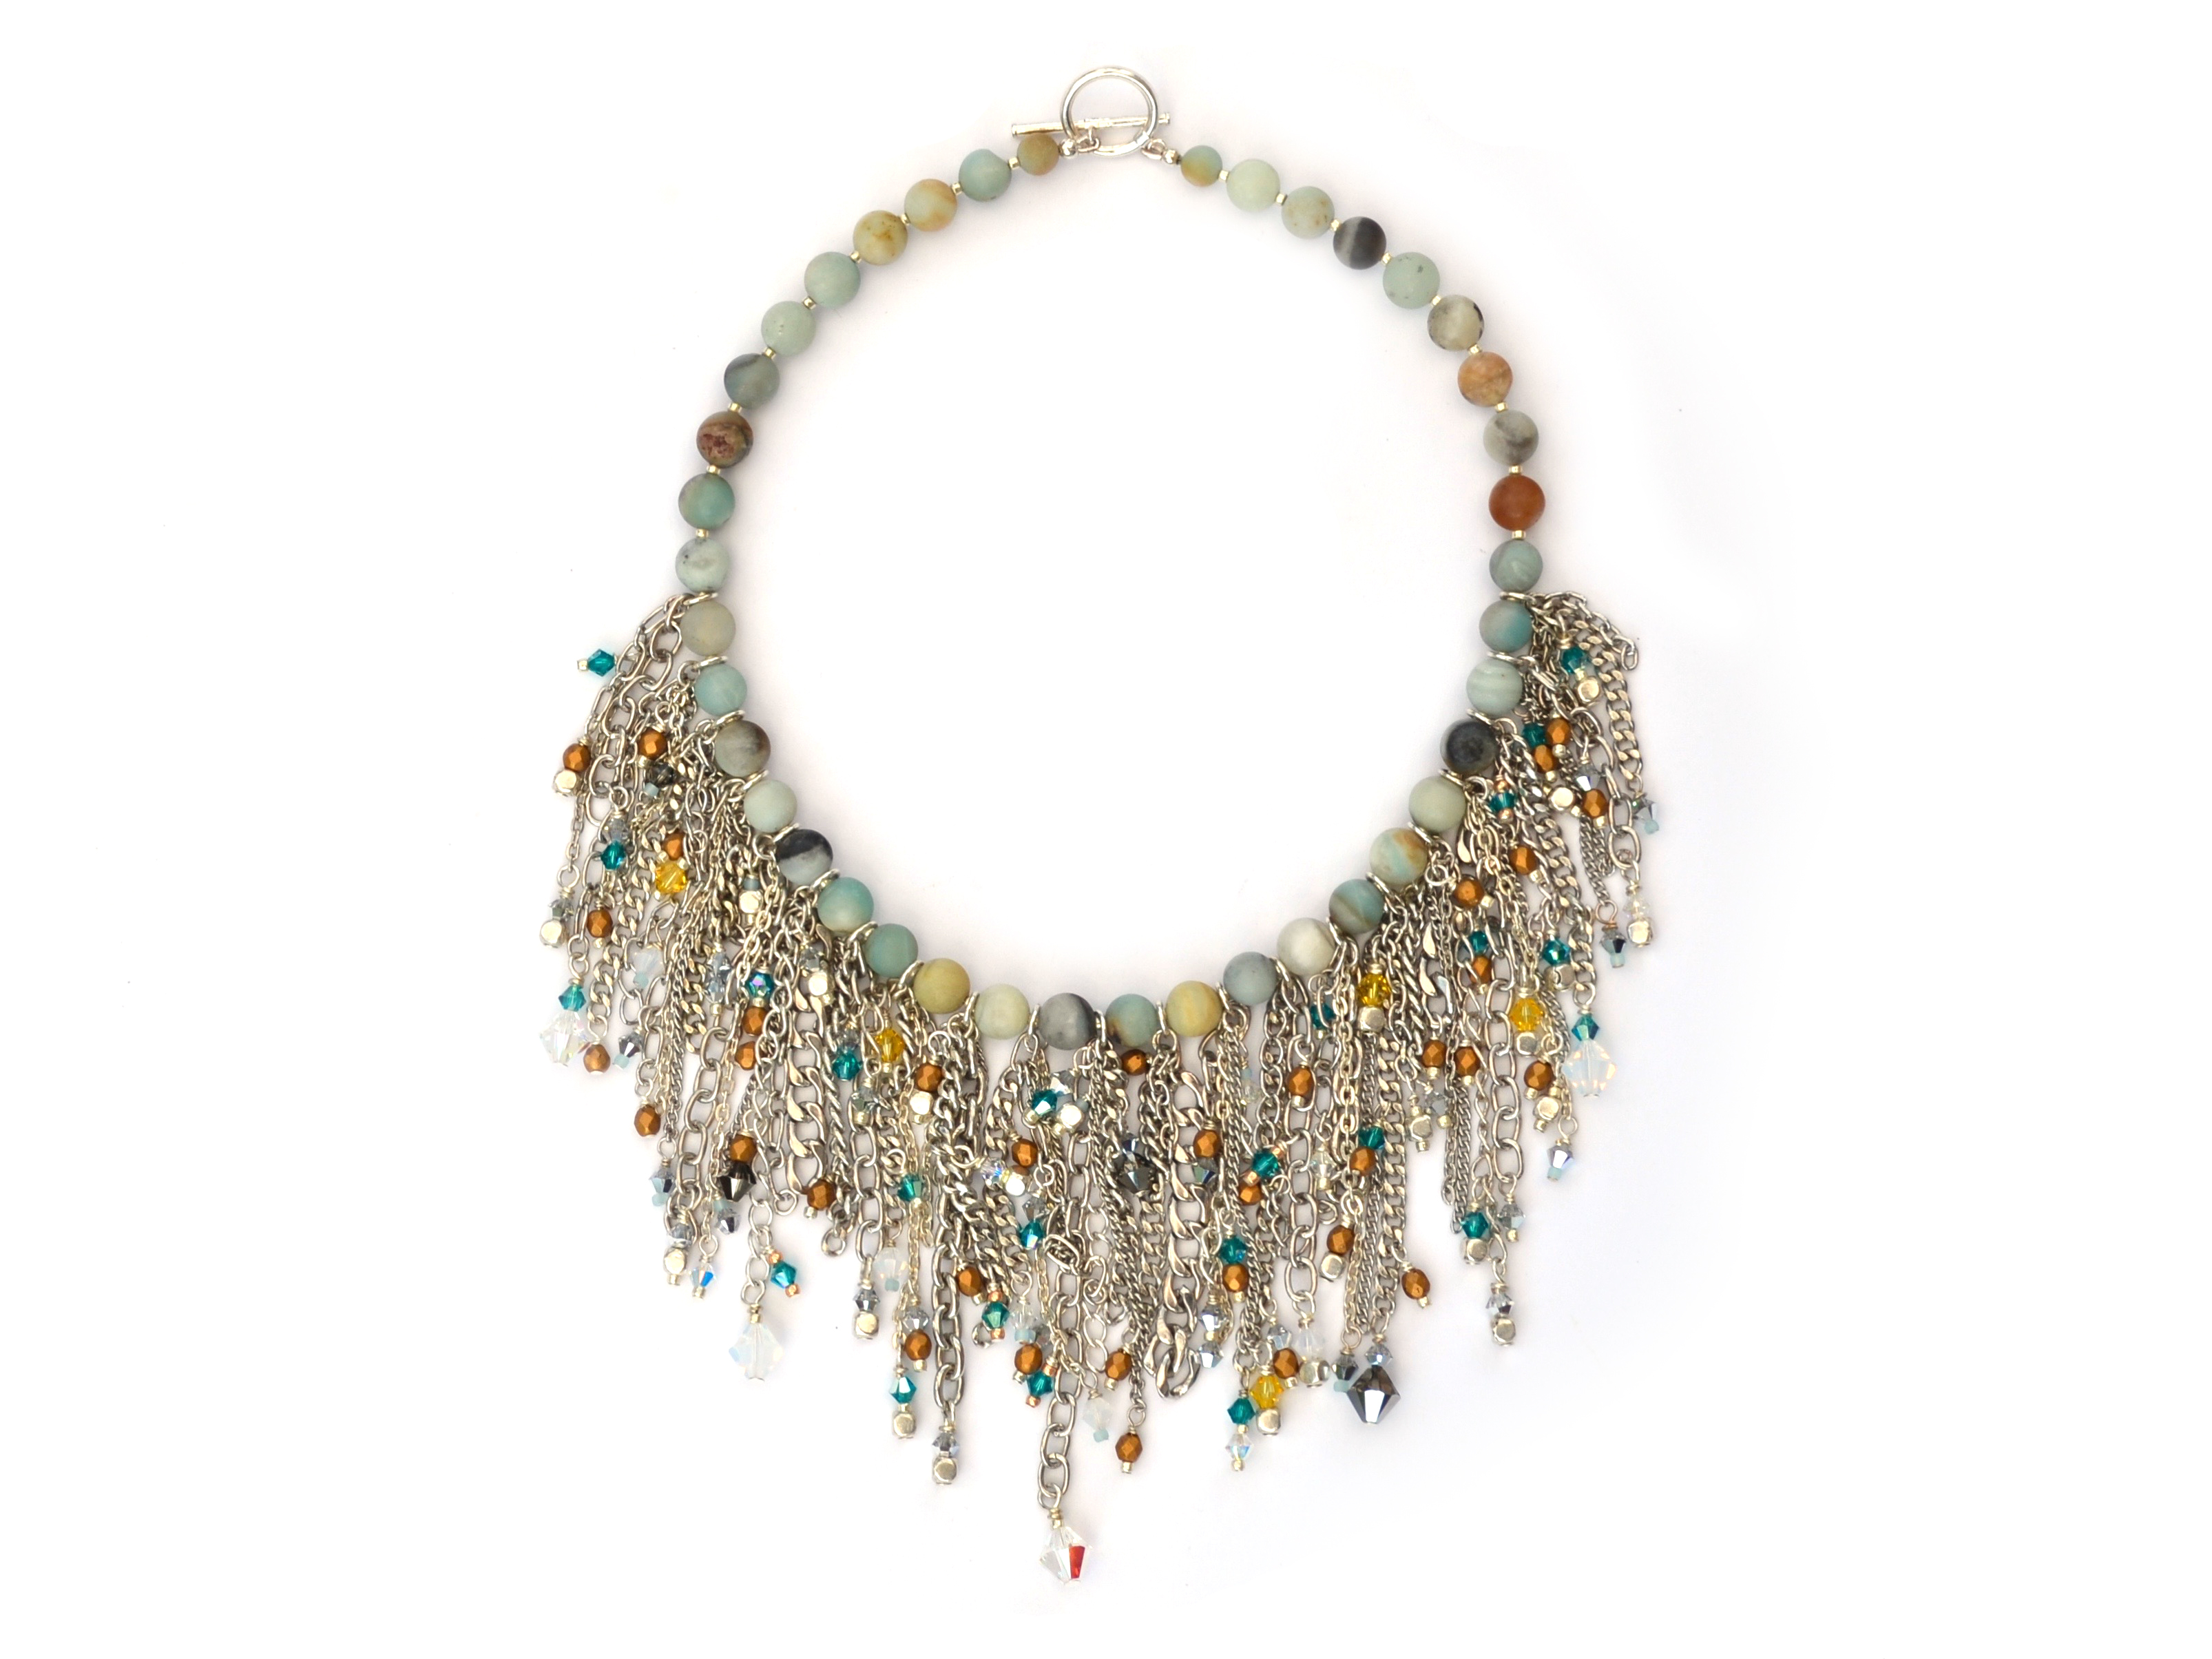 Bespoke jewellery at Aura using pearls and semi-precious stones.